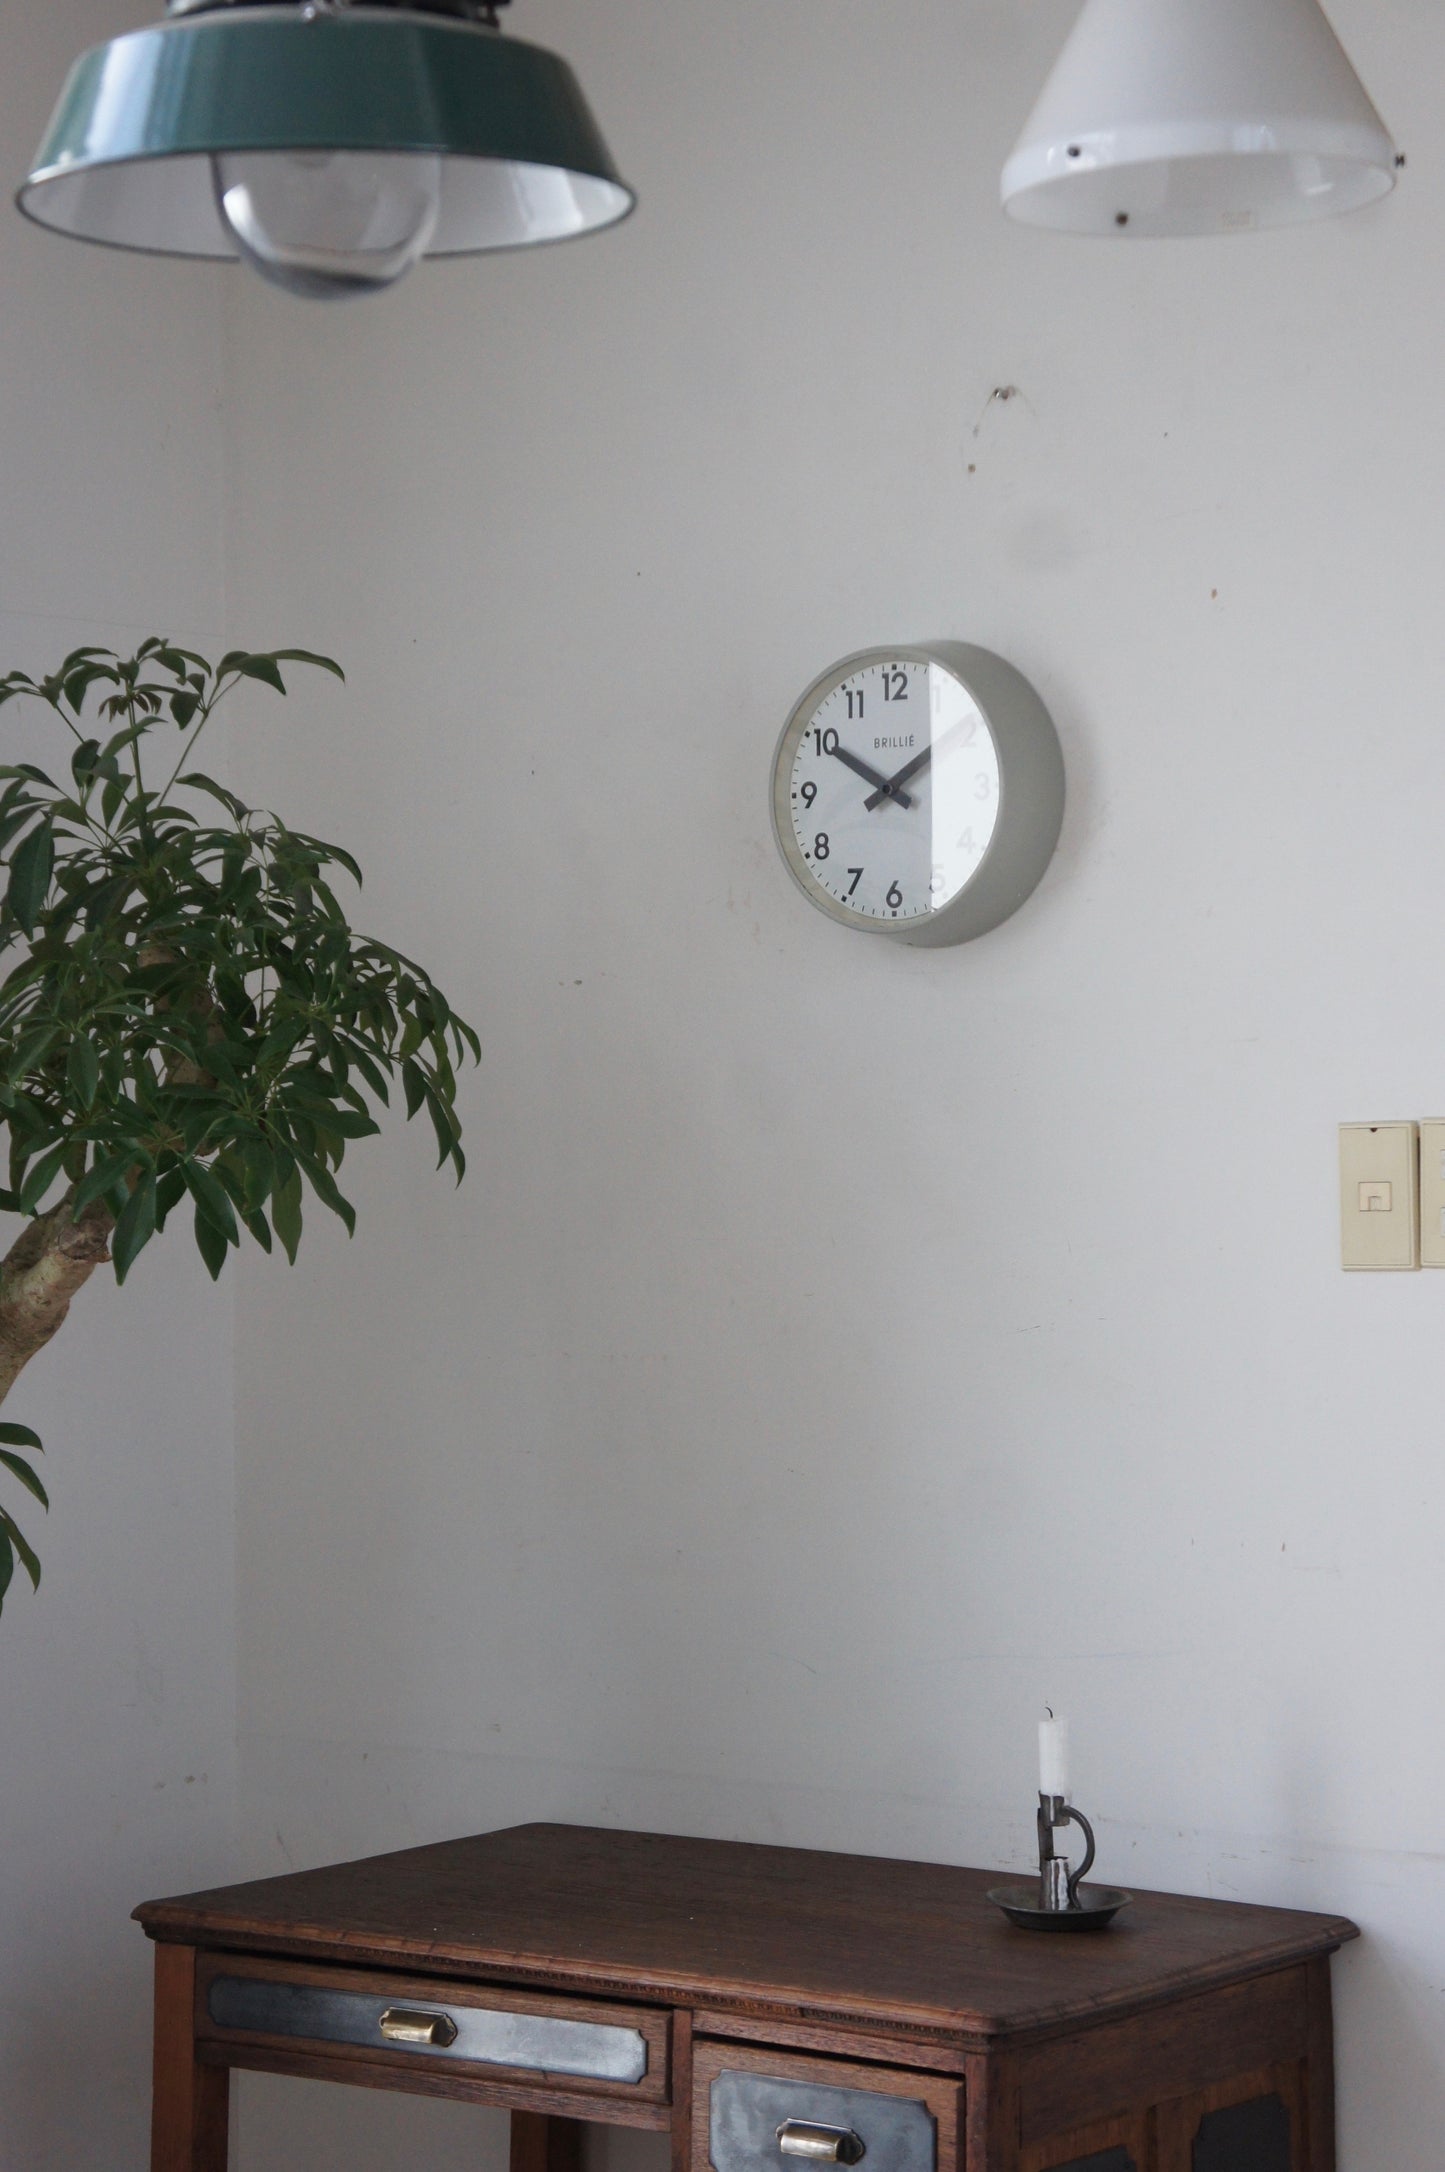 BRILLIÉ Wall clock / gris